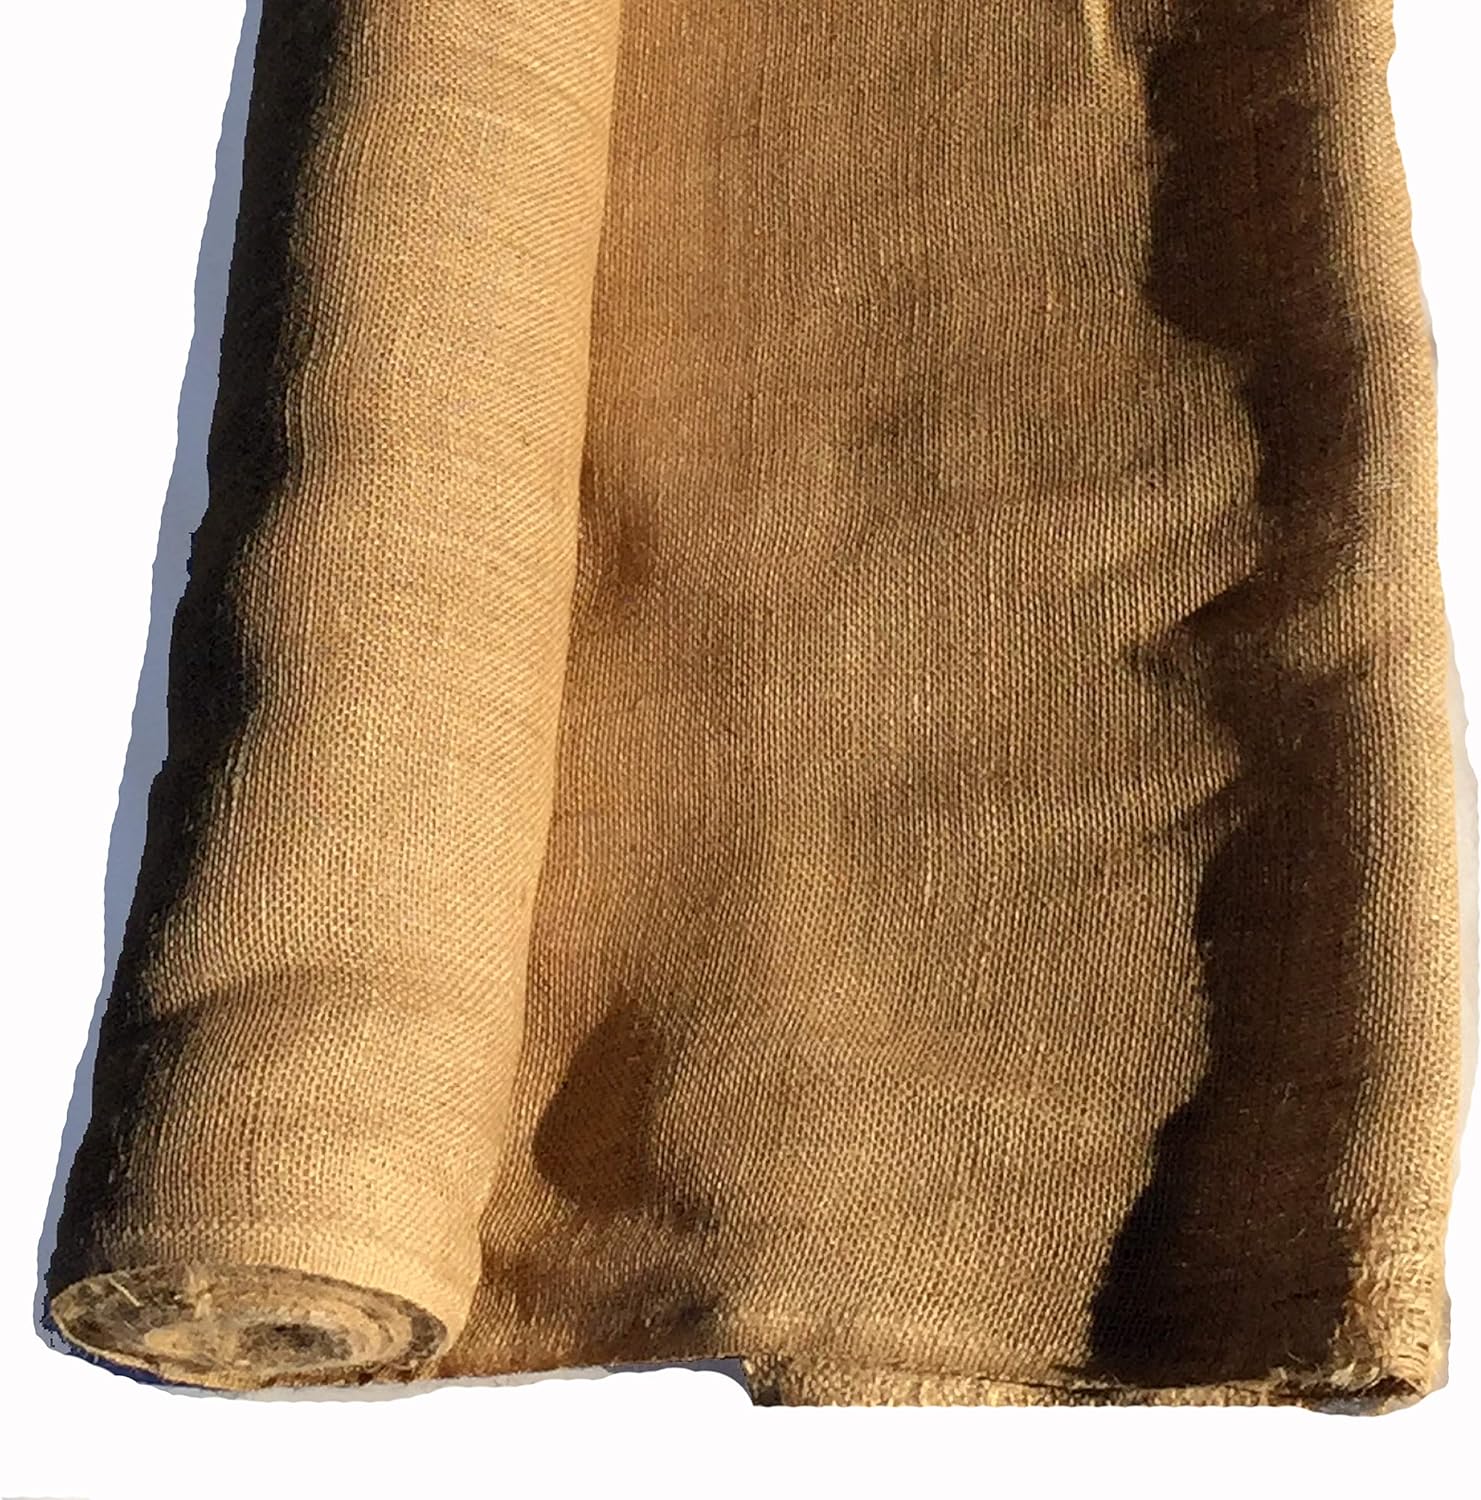 Burlap Fabric Roll | Jute Burlap Fabric | Burlap Rolls for Craft and Gardening | Winter Cover